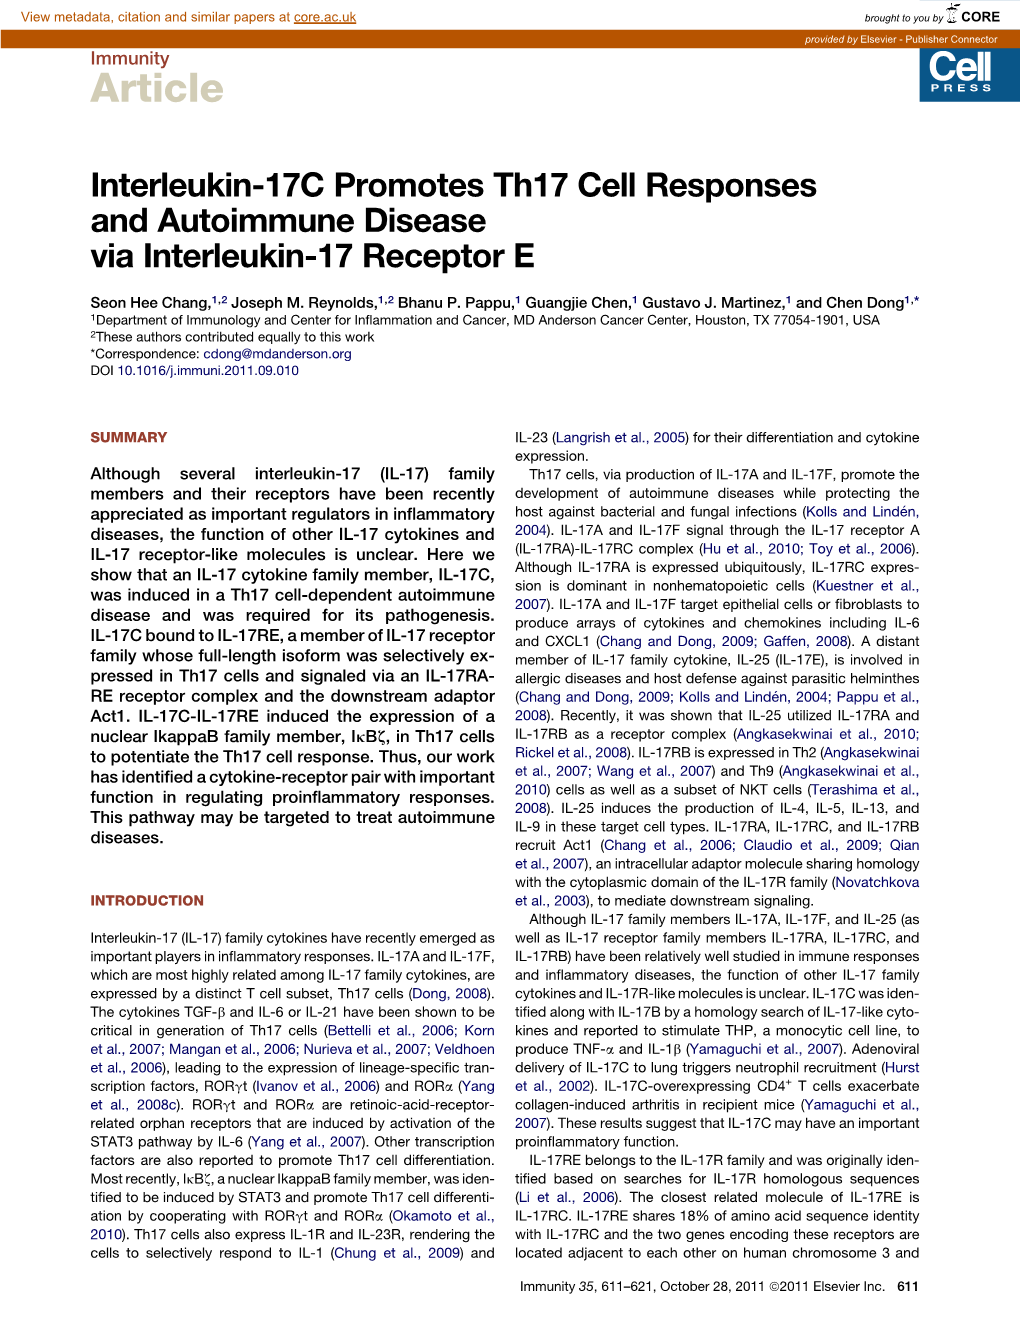 Interleukin-17C Promotes Th17 Cell Responses and Autoimmune Disease Via Interleukin-17 Receptor E